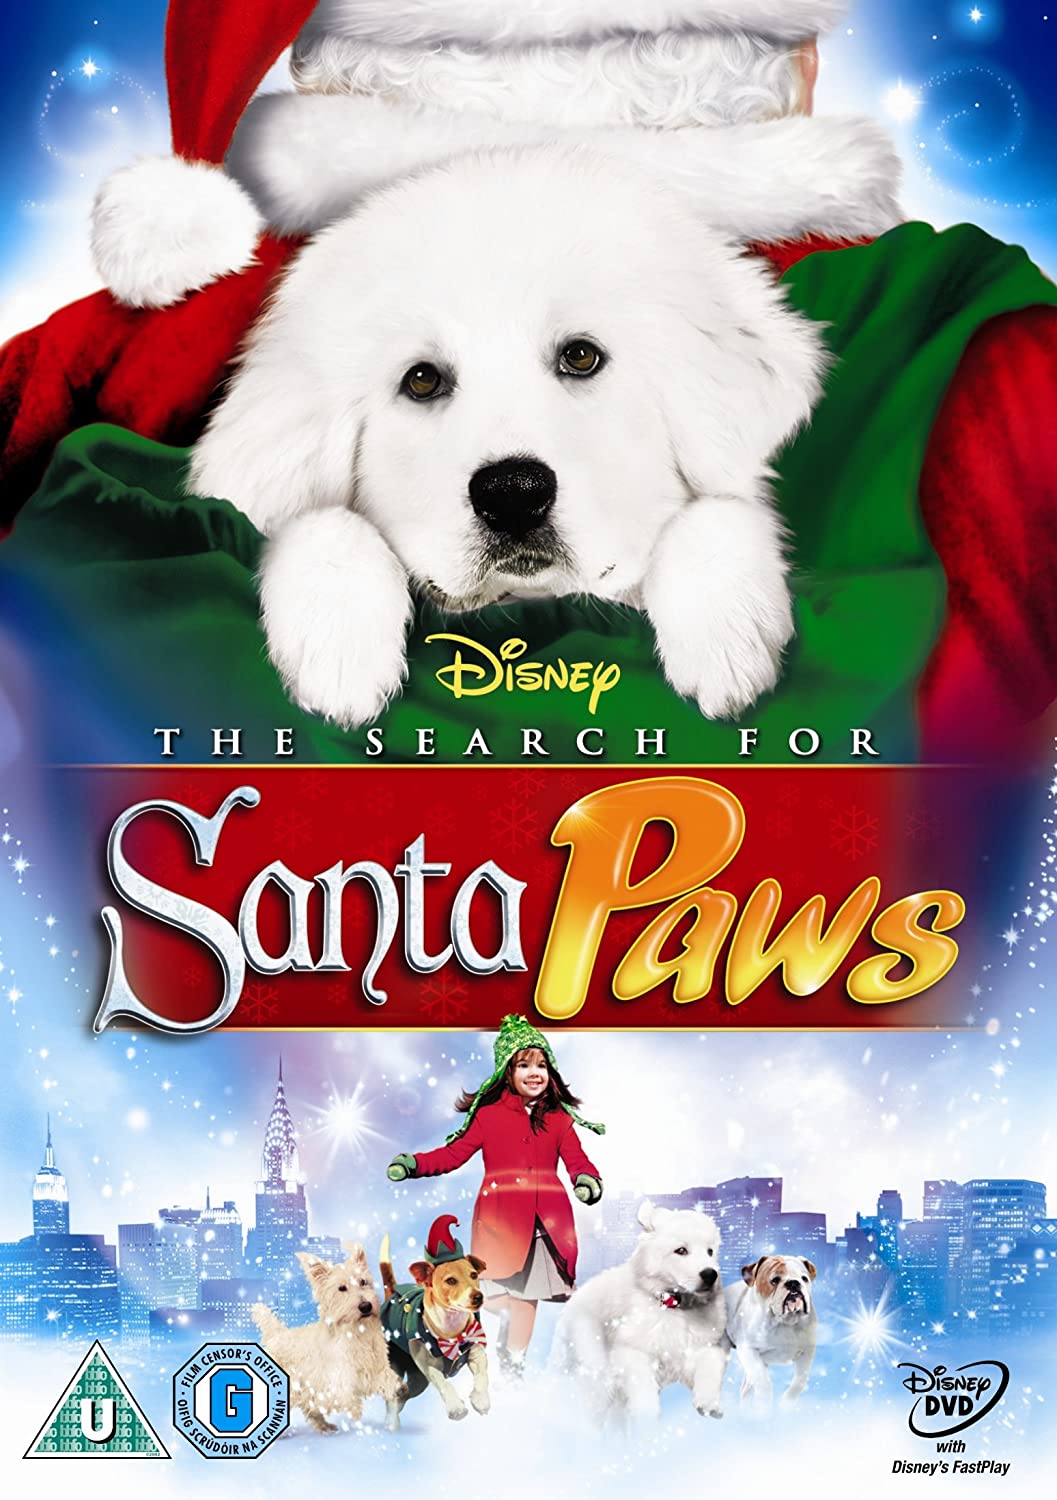 Disney Buddies: The Search for Santa Paws - Family/Adventure [DVD]